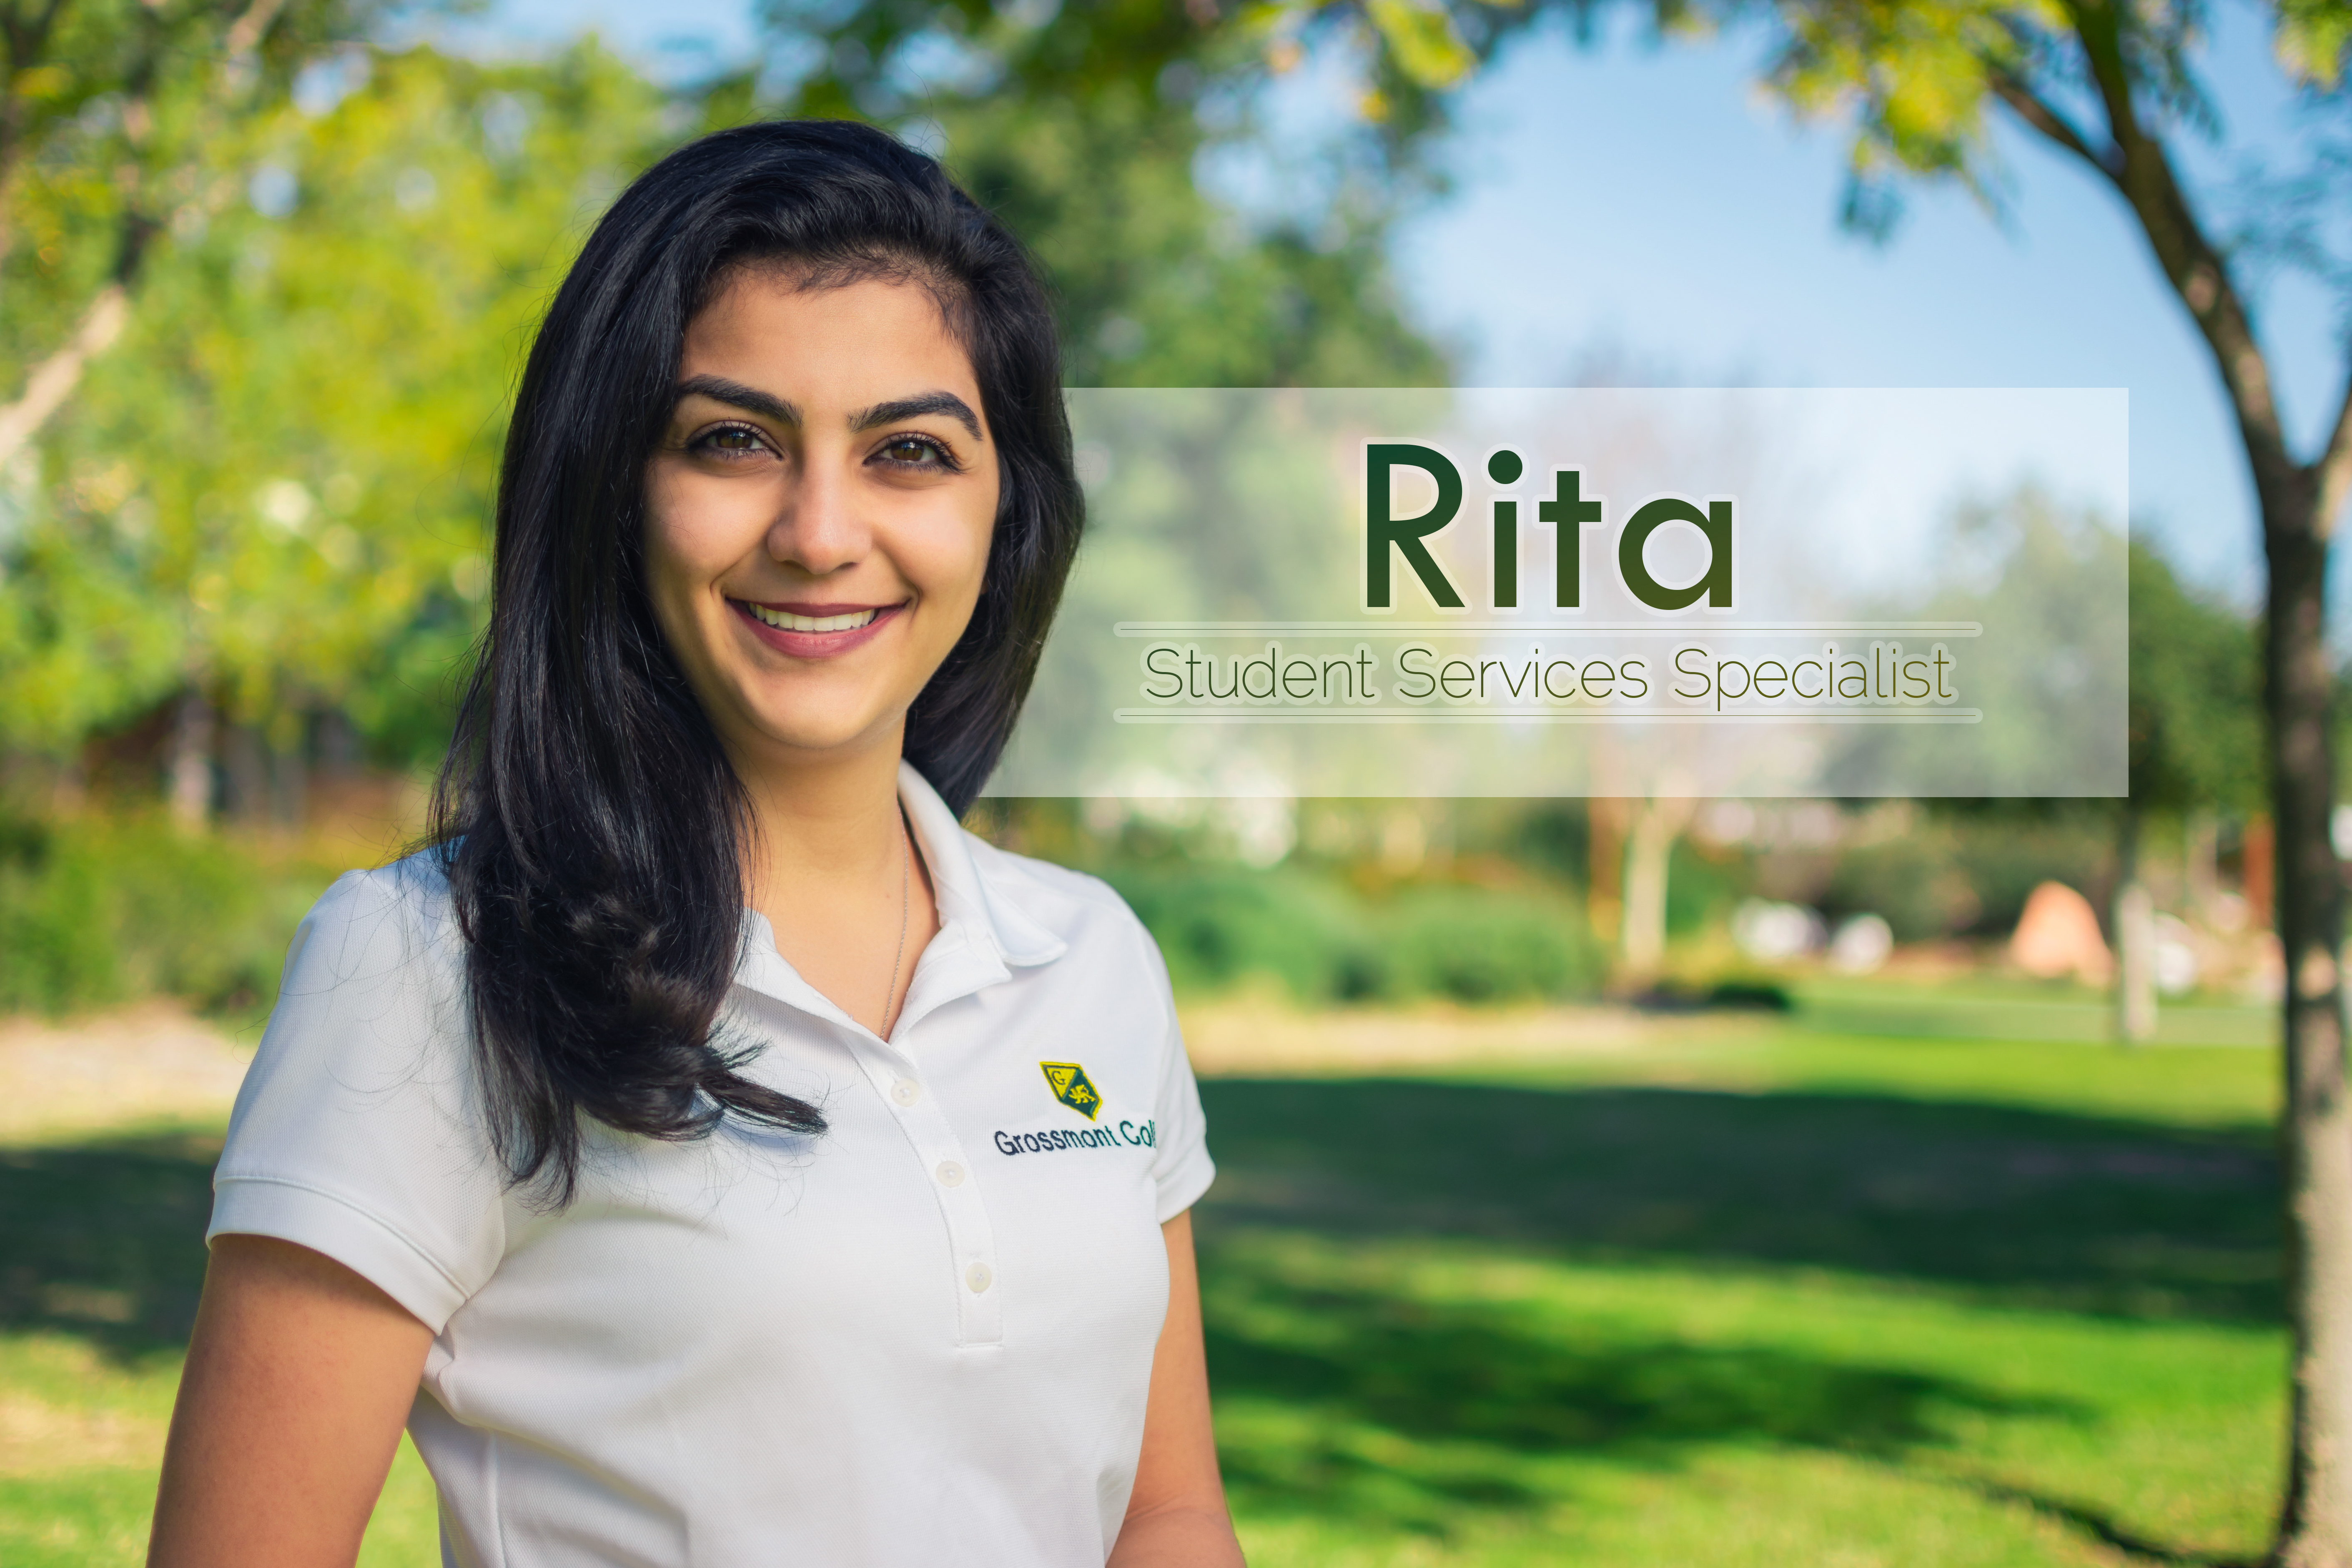 Rita - Student Services Specialist